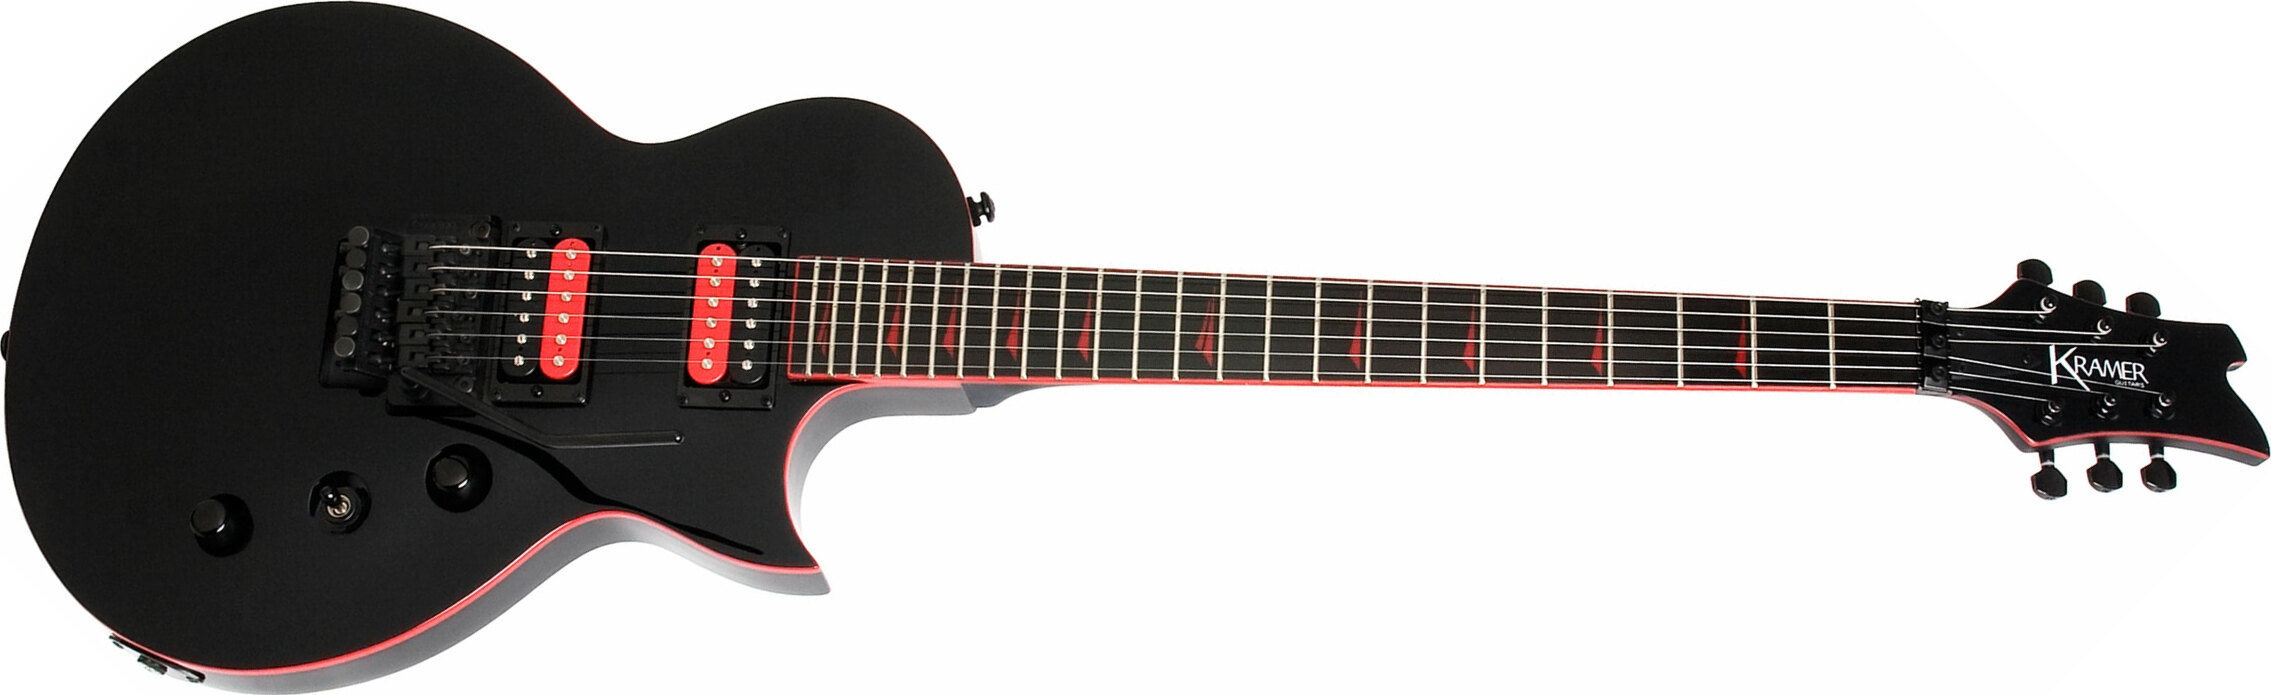 Kramer Assault 220 2h Fr Rw - Black Red Binding - Single cut electric guitar - Main picture